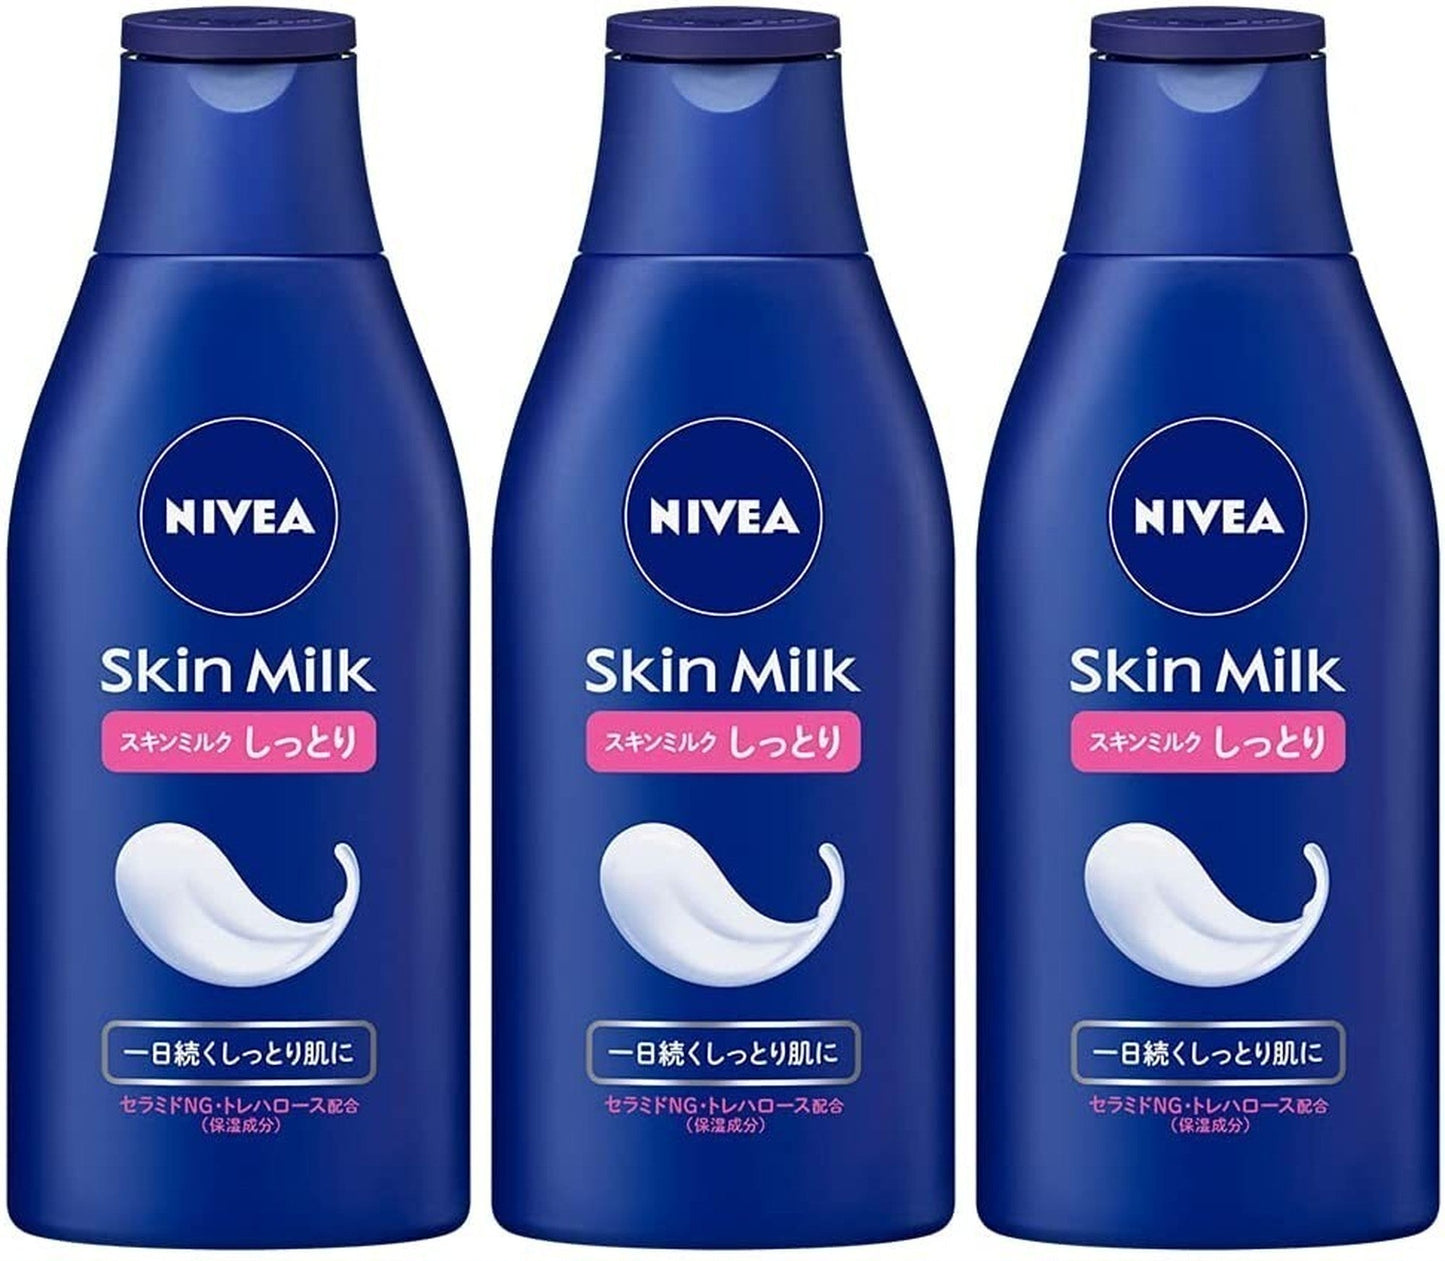 [Limit 1 per person] Nivea Skin Milk Moist 200g Set of 3 JAN: 4901301291165